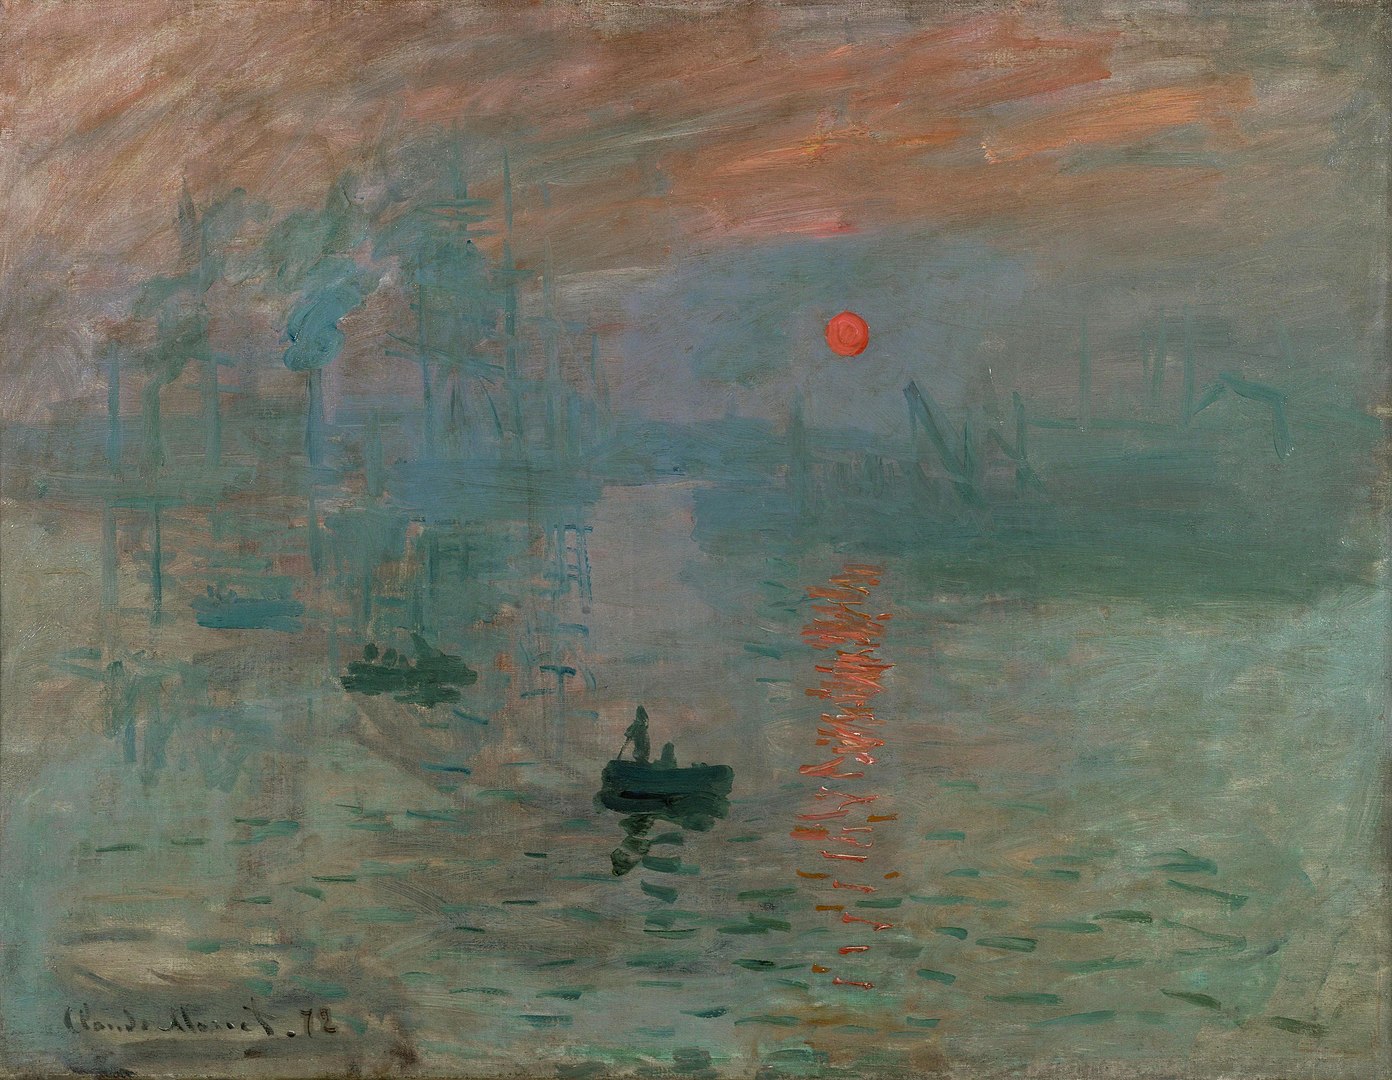 Impression, Sunrise" by Claude Monet (1872)